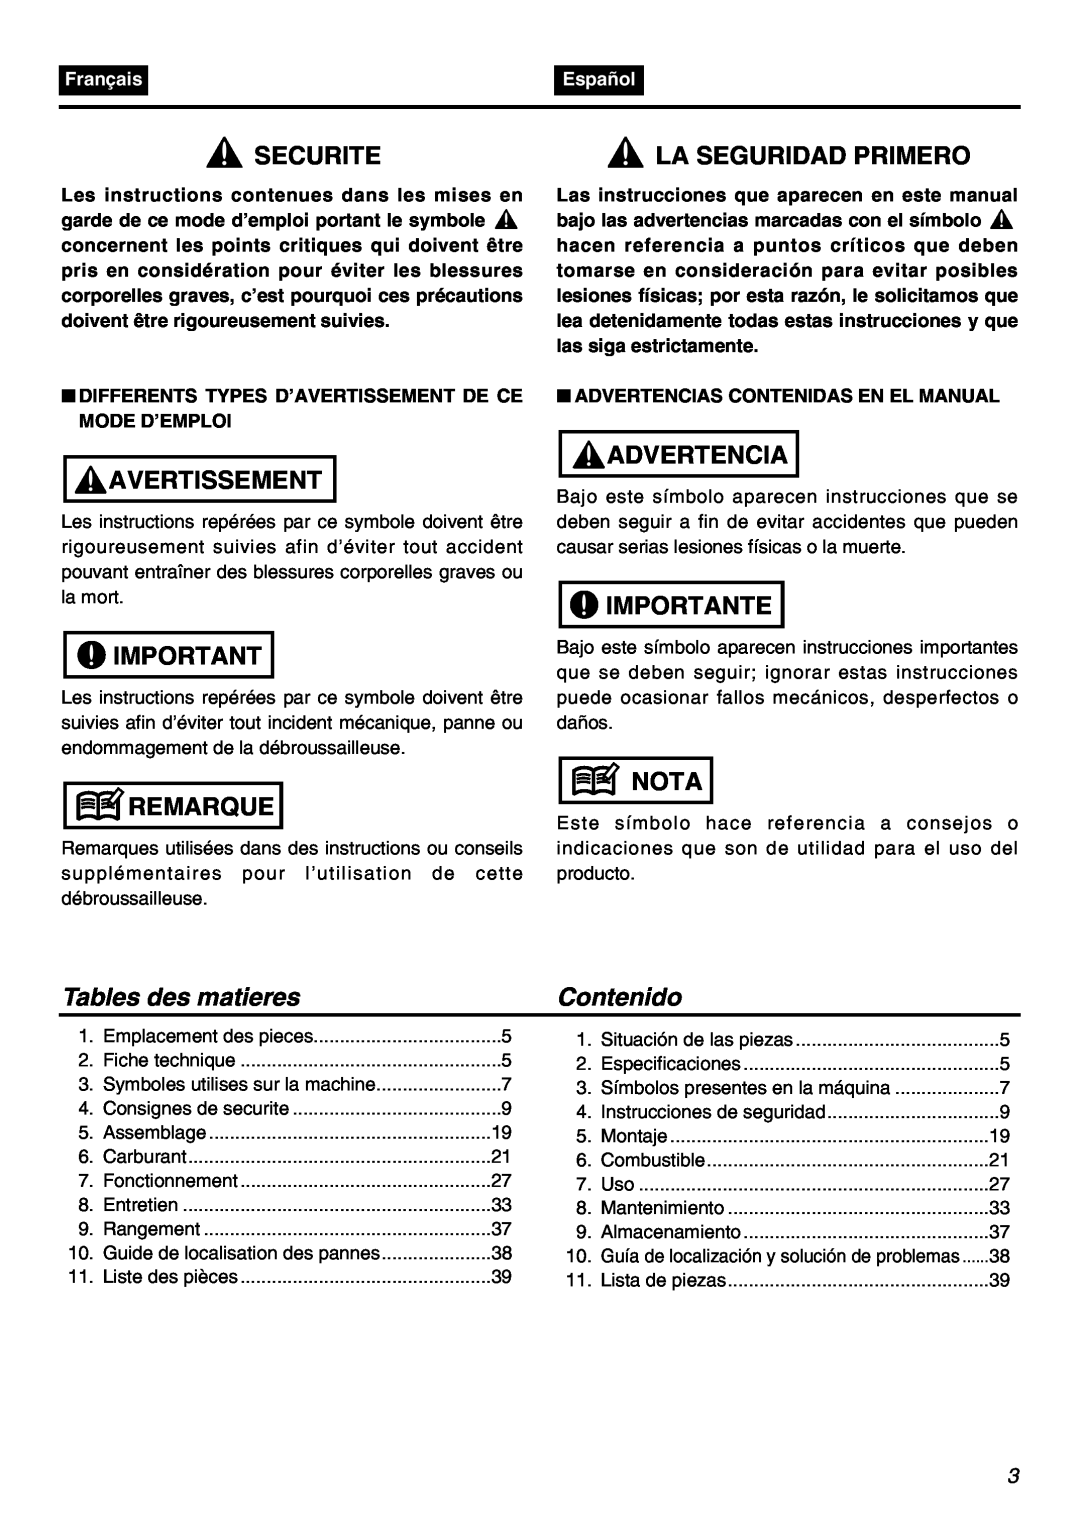 RedMax EDG2300R manual Securite, Avertissement, Remarque, Advertencia, Importante, Nota, Tables des matieres, Contenido 